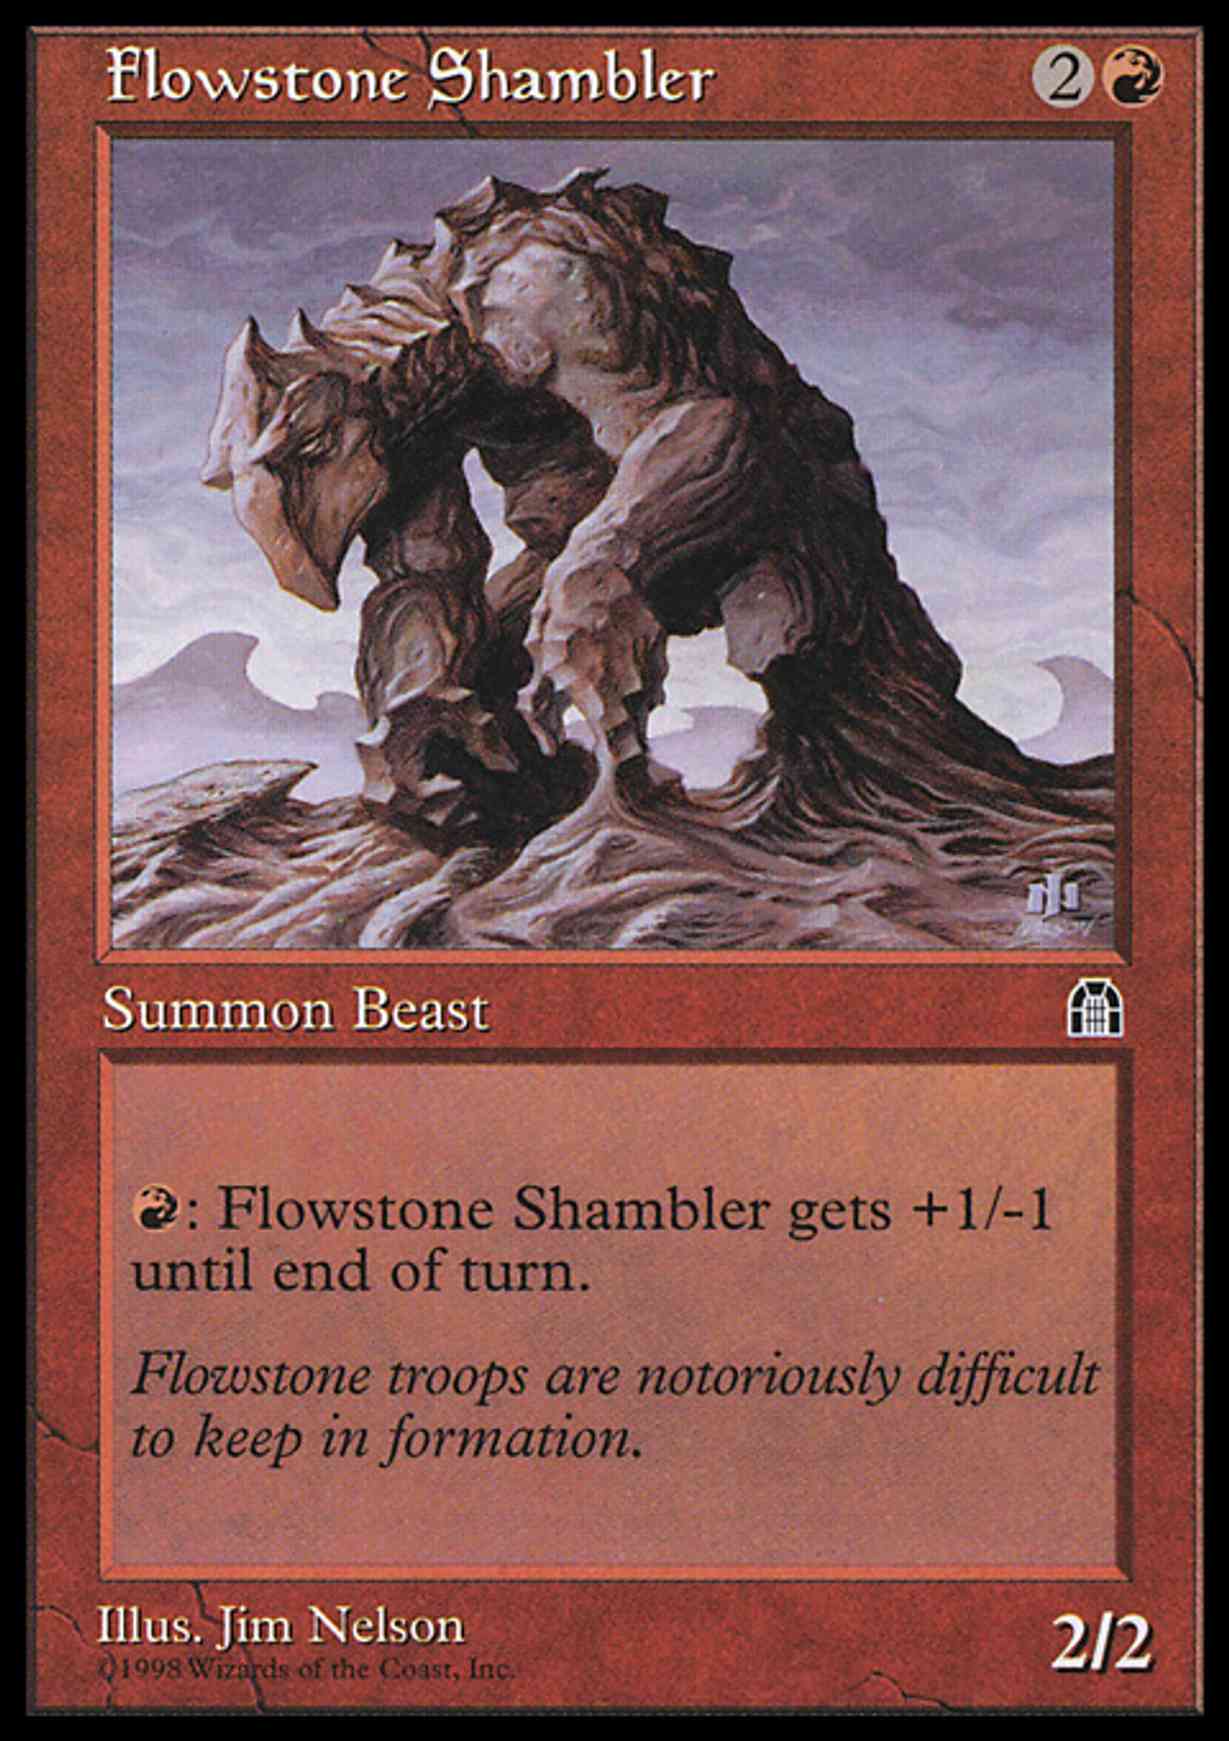 Flowstone Shambler magic card front